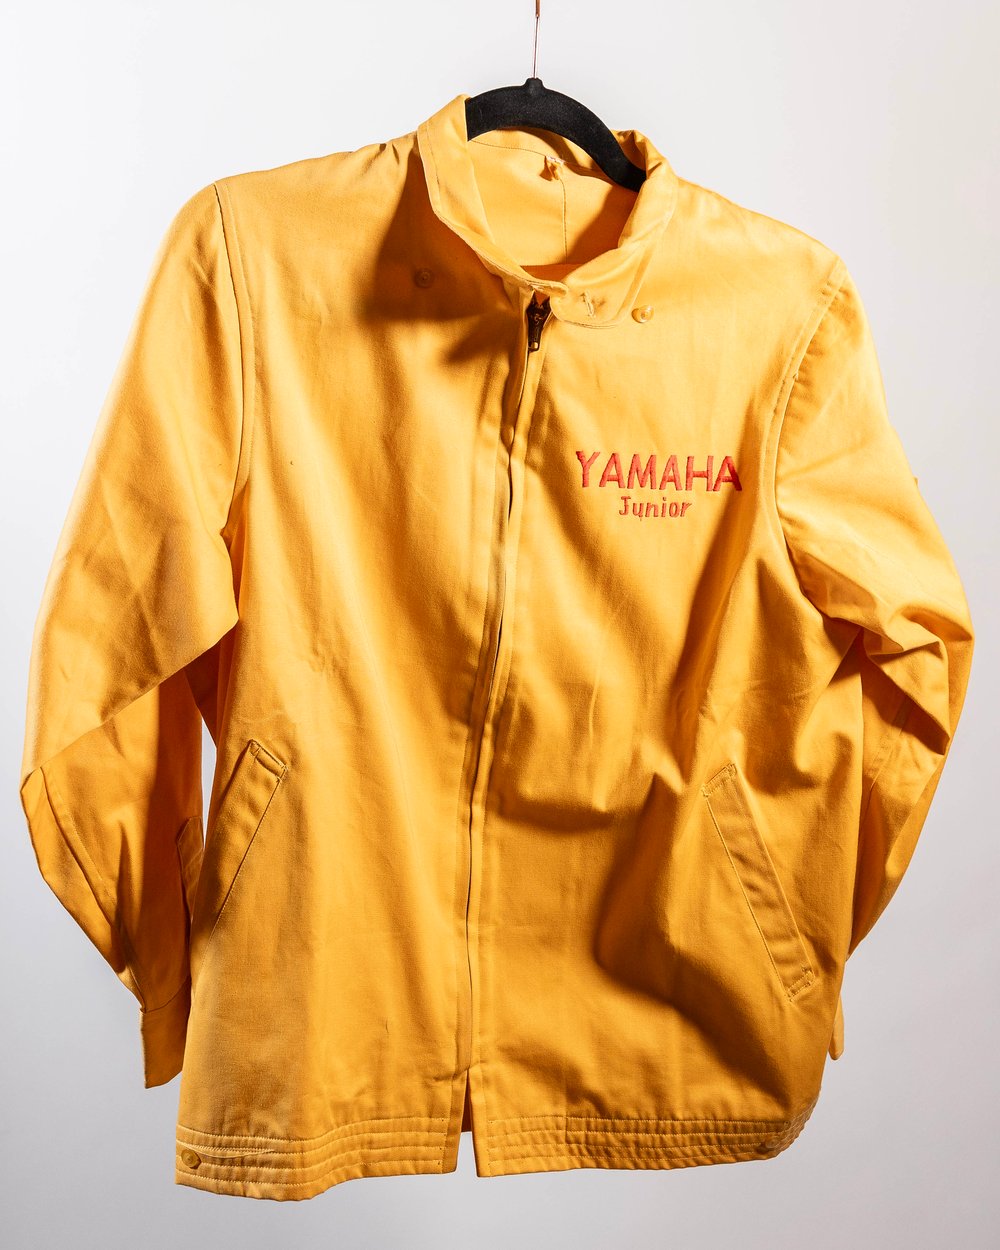 Yamaha Junior Jacket (Small)